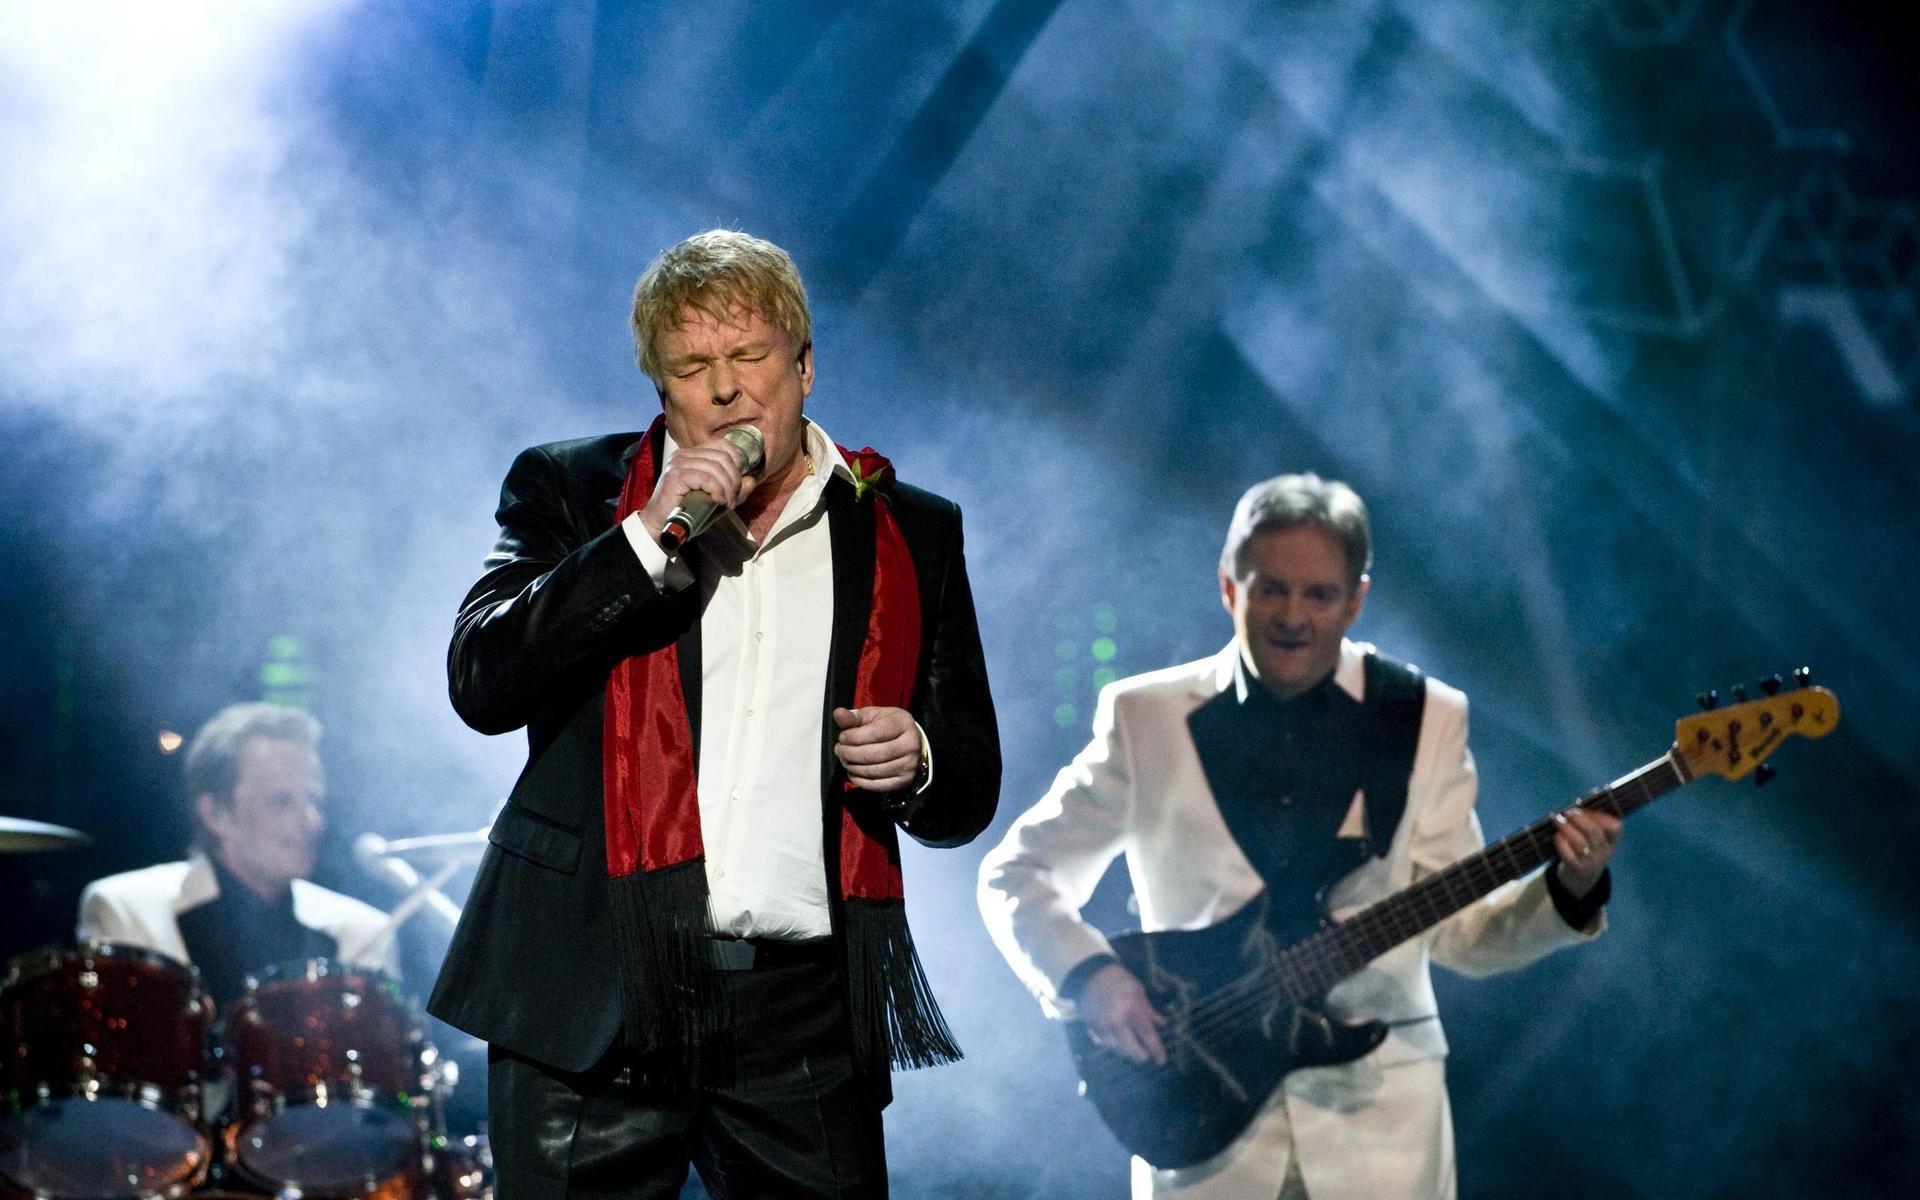 Thorleifs framträder vid genrepet i deltävling 4 i Melodifestivalen 2009 i Malmö arena.